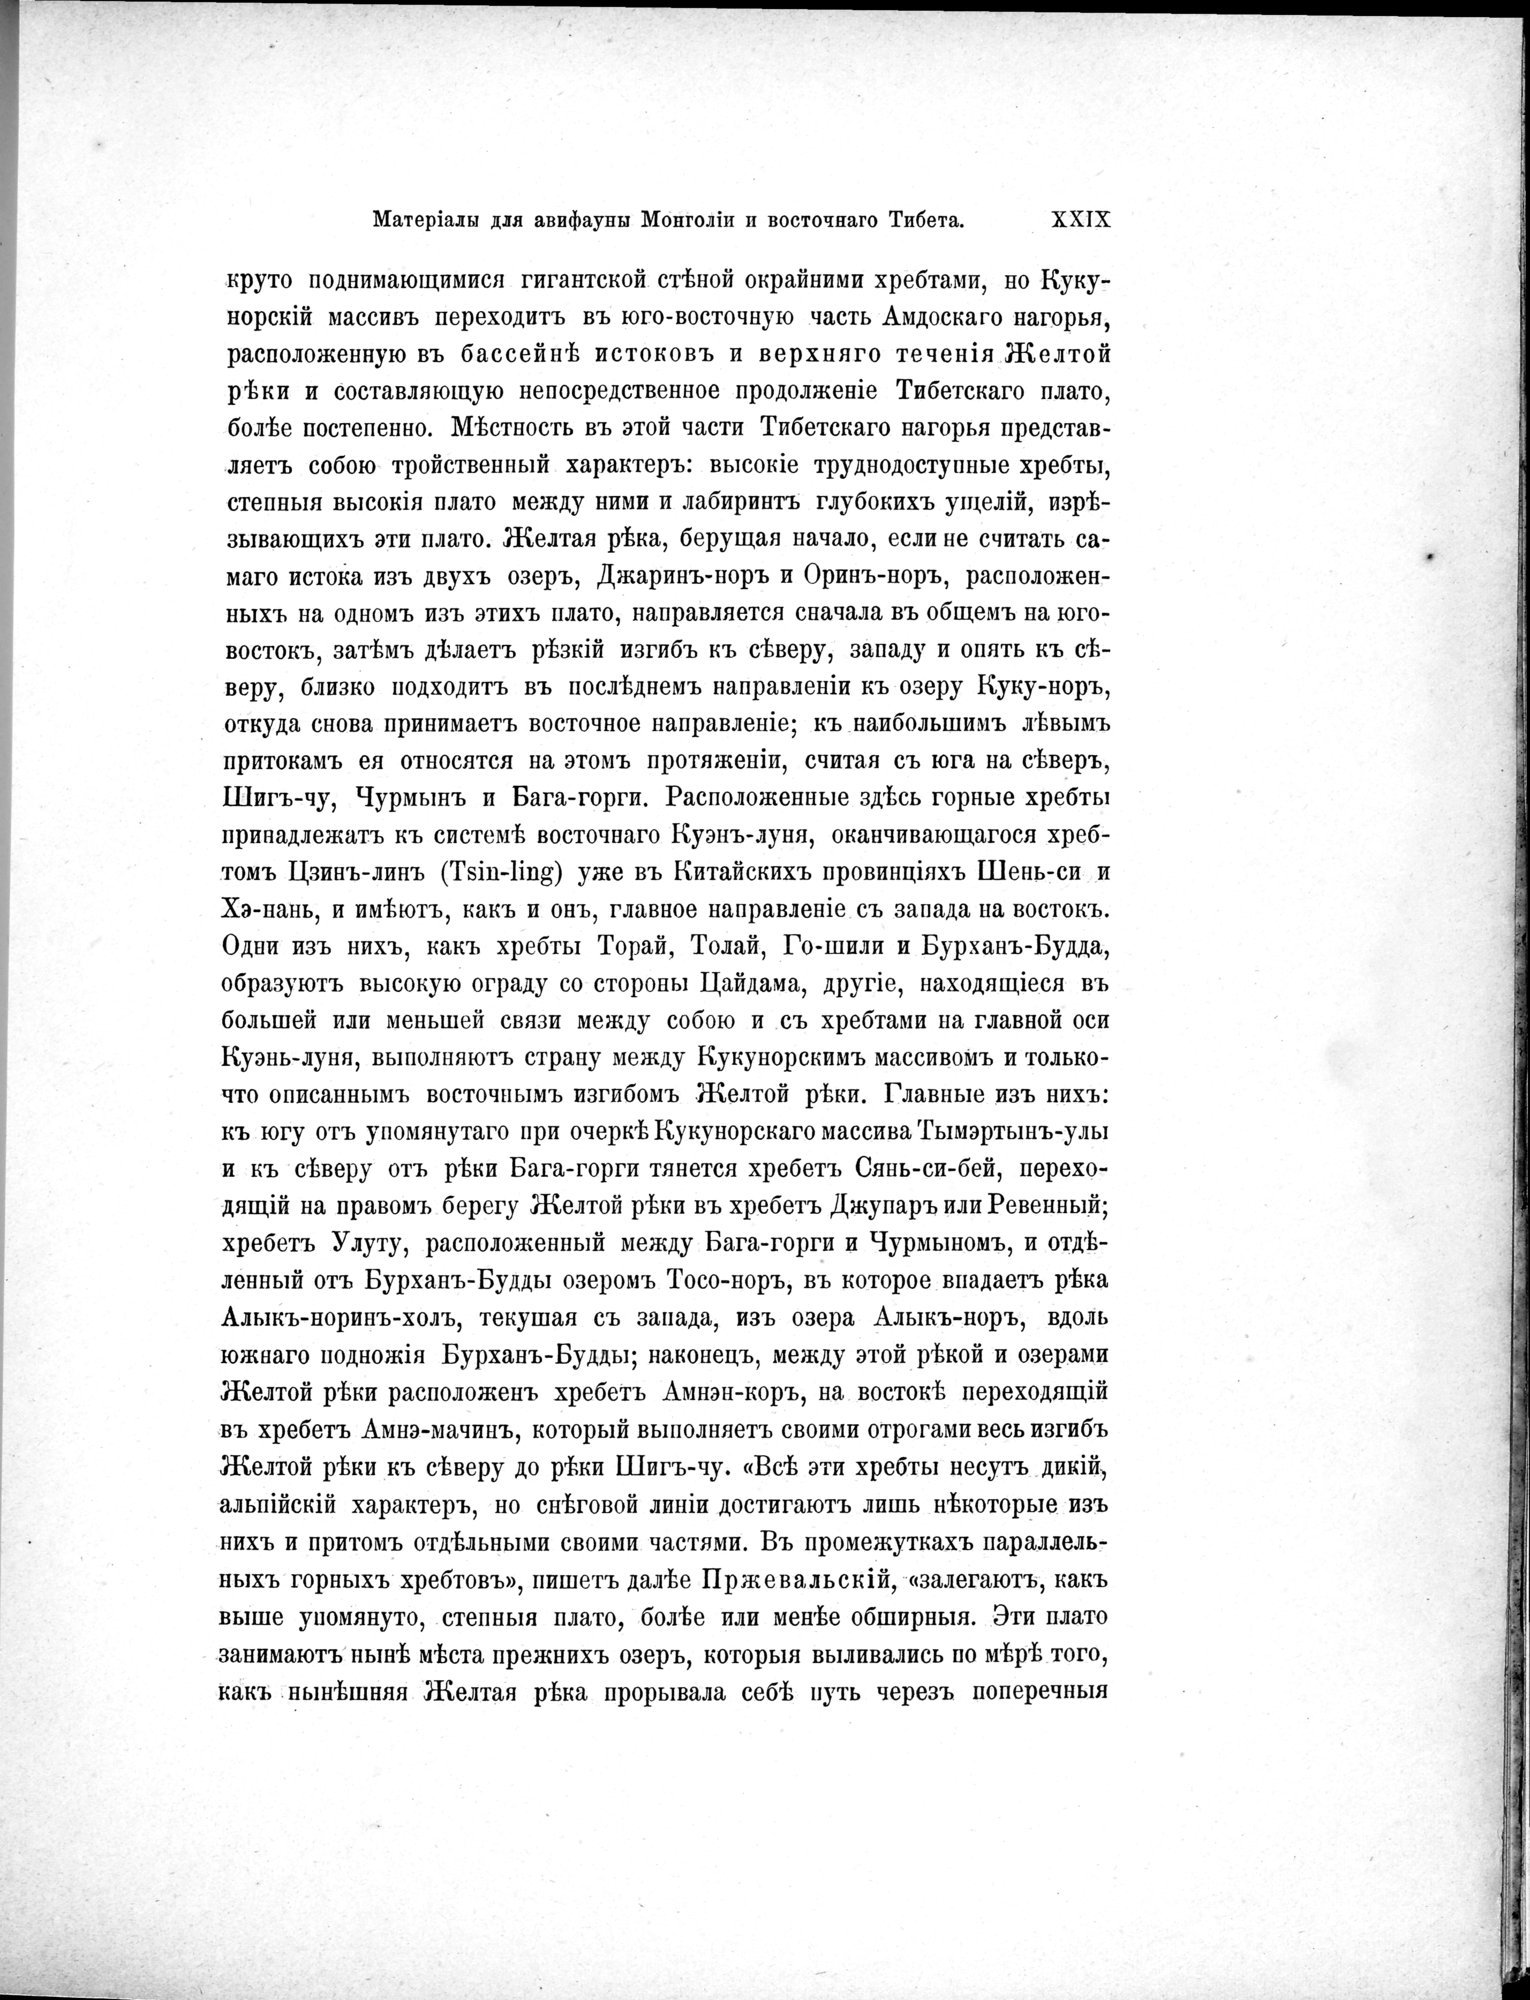 Mongoliia i Kam : vol.5 / Page 43 (Grayscale High Resolution Image)